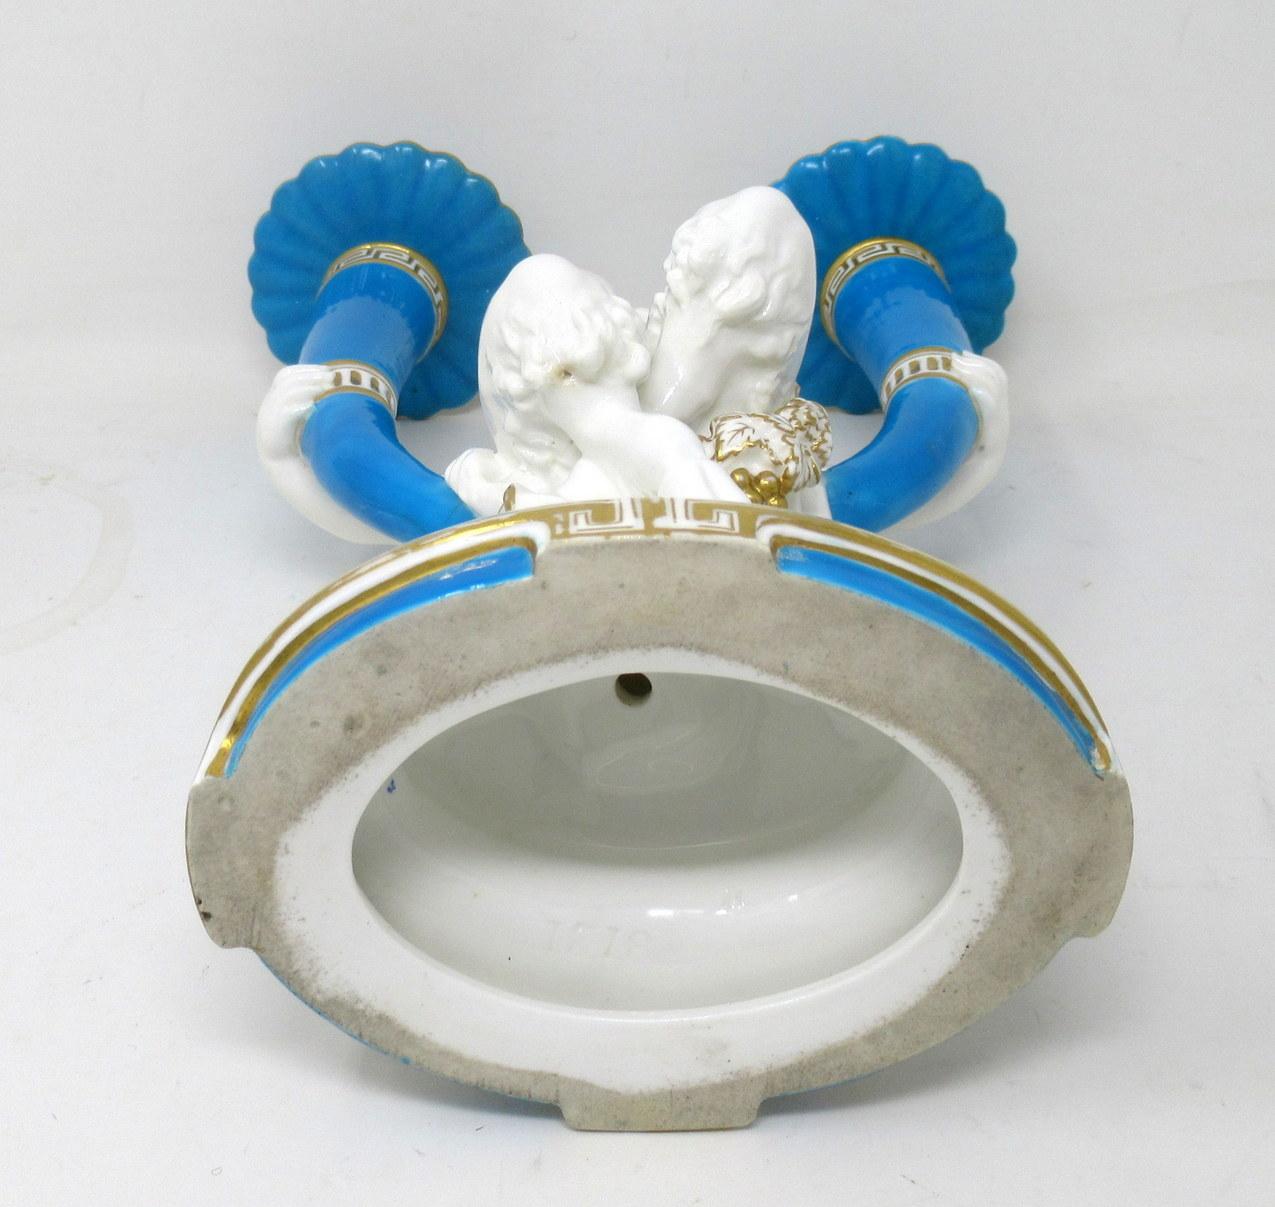 Antique Minton Staffordshire Porcelain Candelabra Centerpiece Cherub 19th Ct   In Good Condition For Sale In Dublin, Ireland